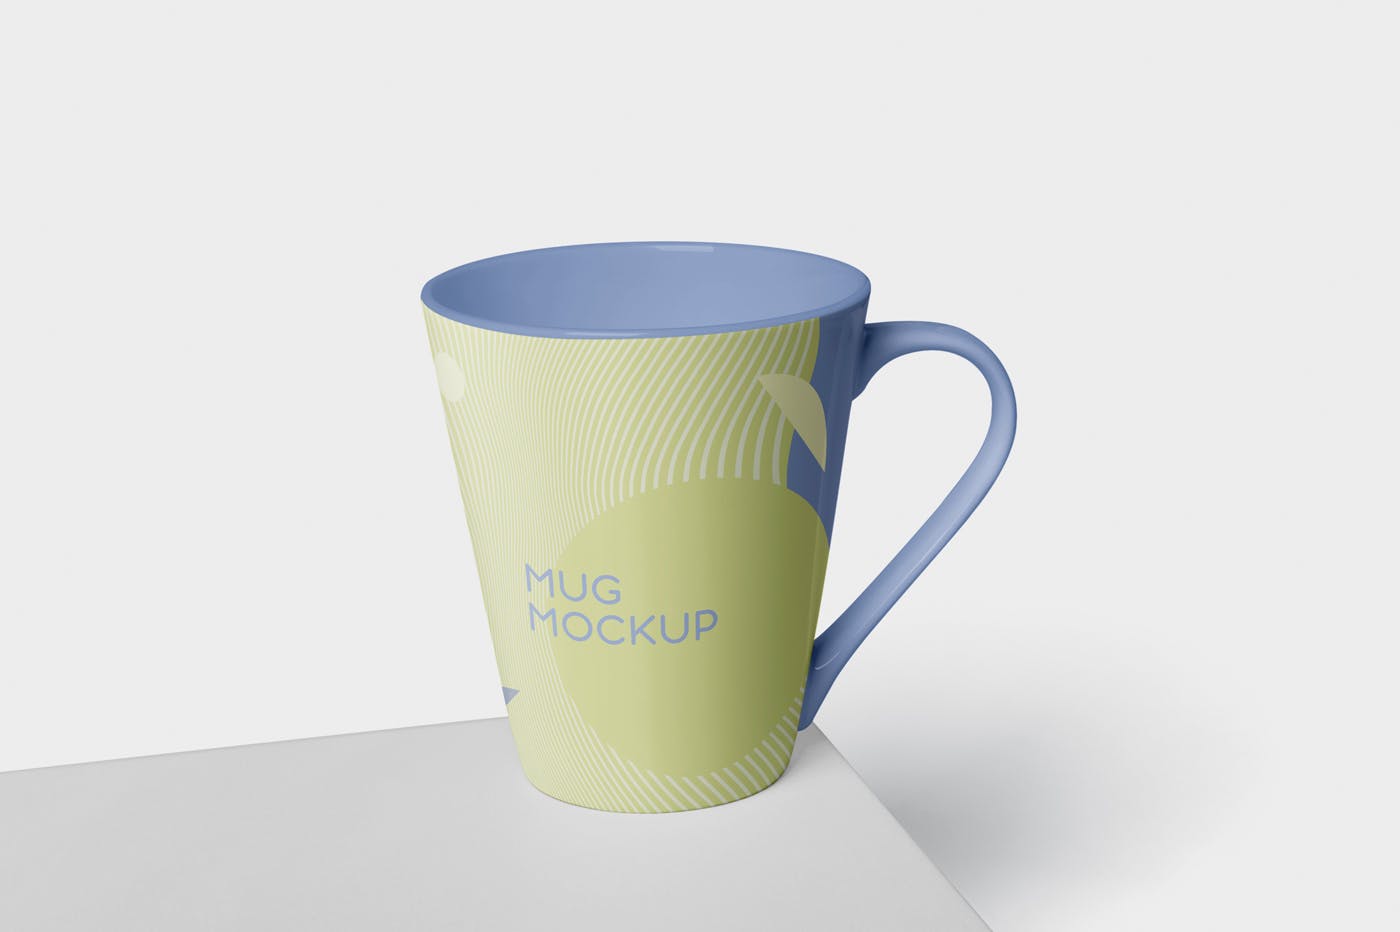 锥形马克杯图案设计普贤居精选 Mug Mockup – Cone Shaped插图(2)